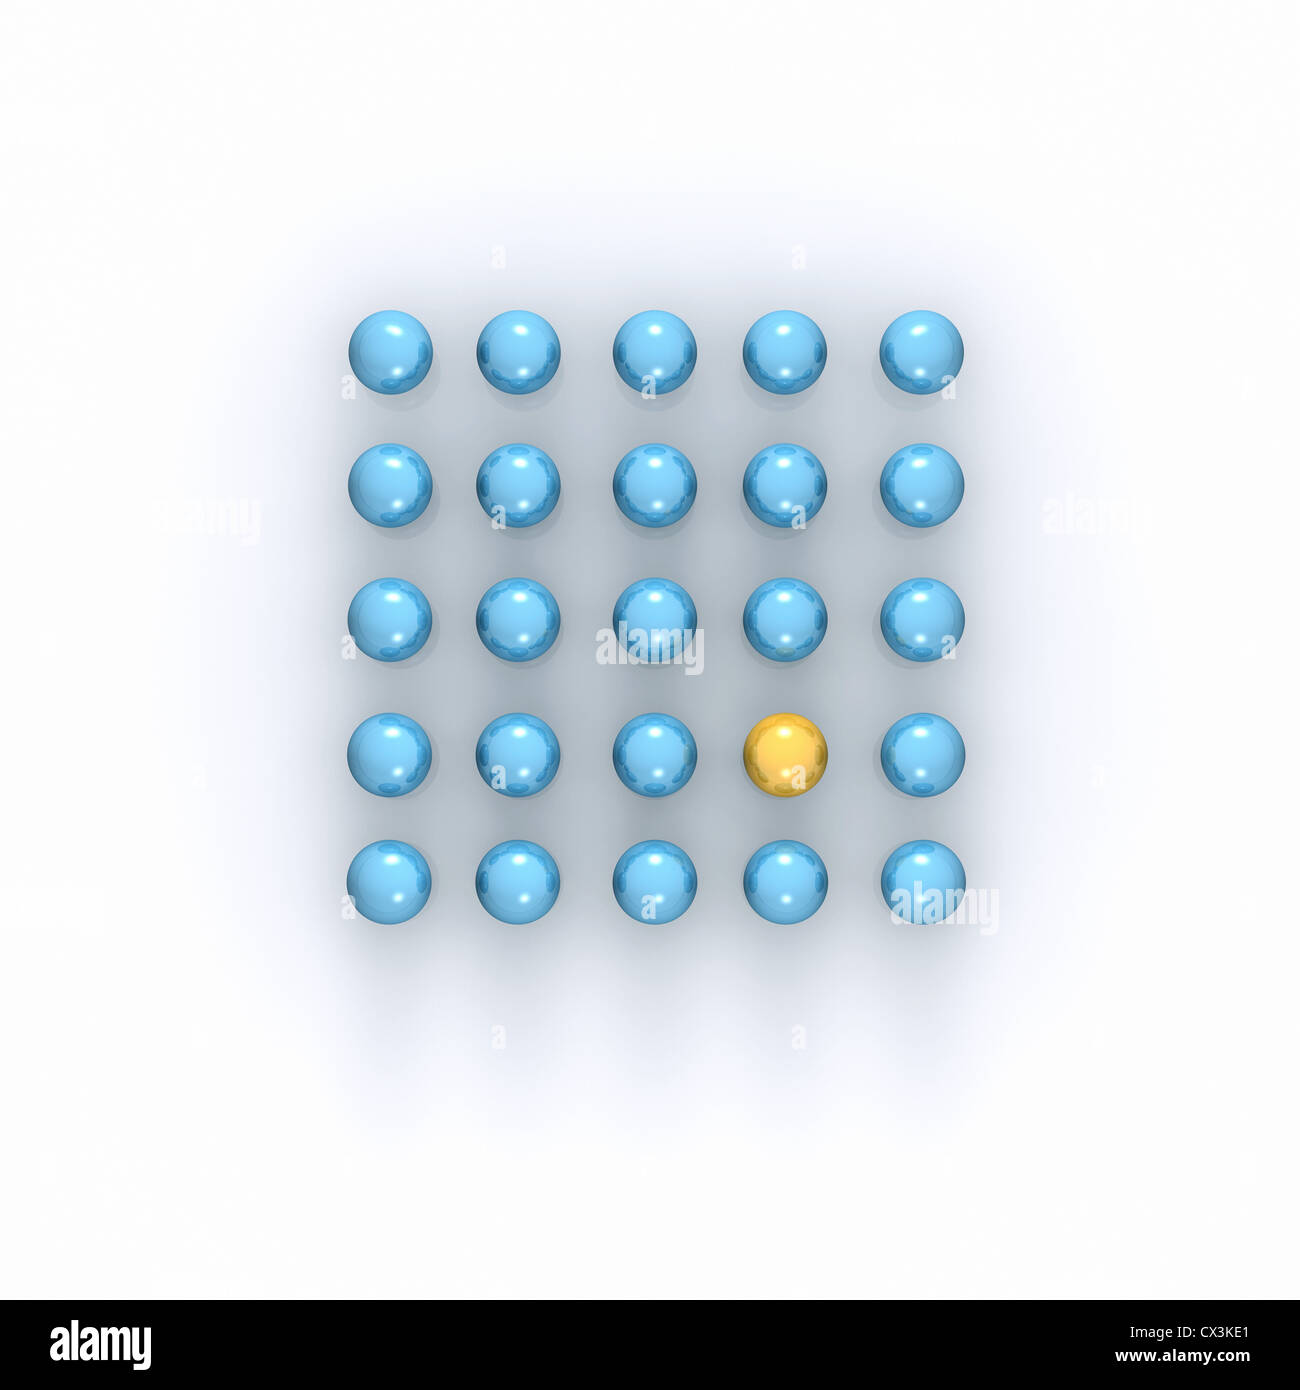 Quadrato di palle blu, uno è giallo - Quadrat aus 25 blauen Kugeln, eine ist gelb - Foto Stock